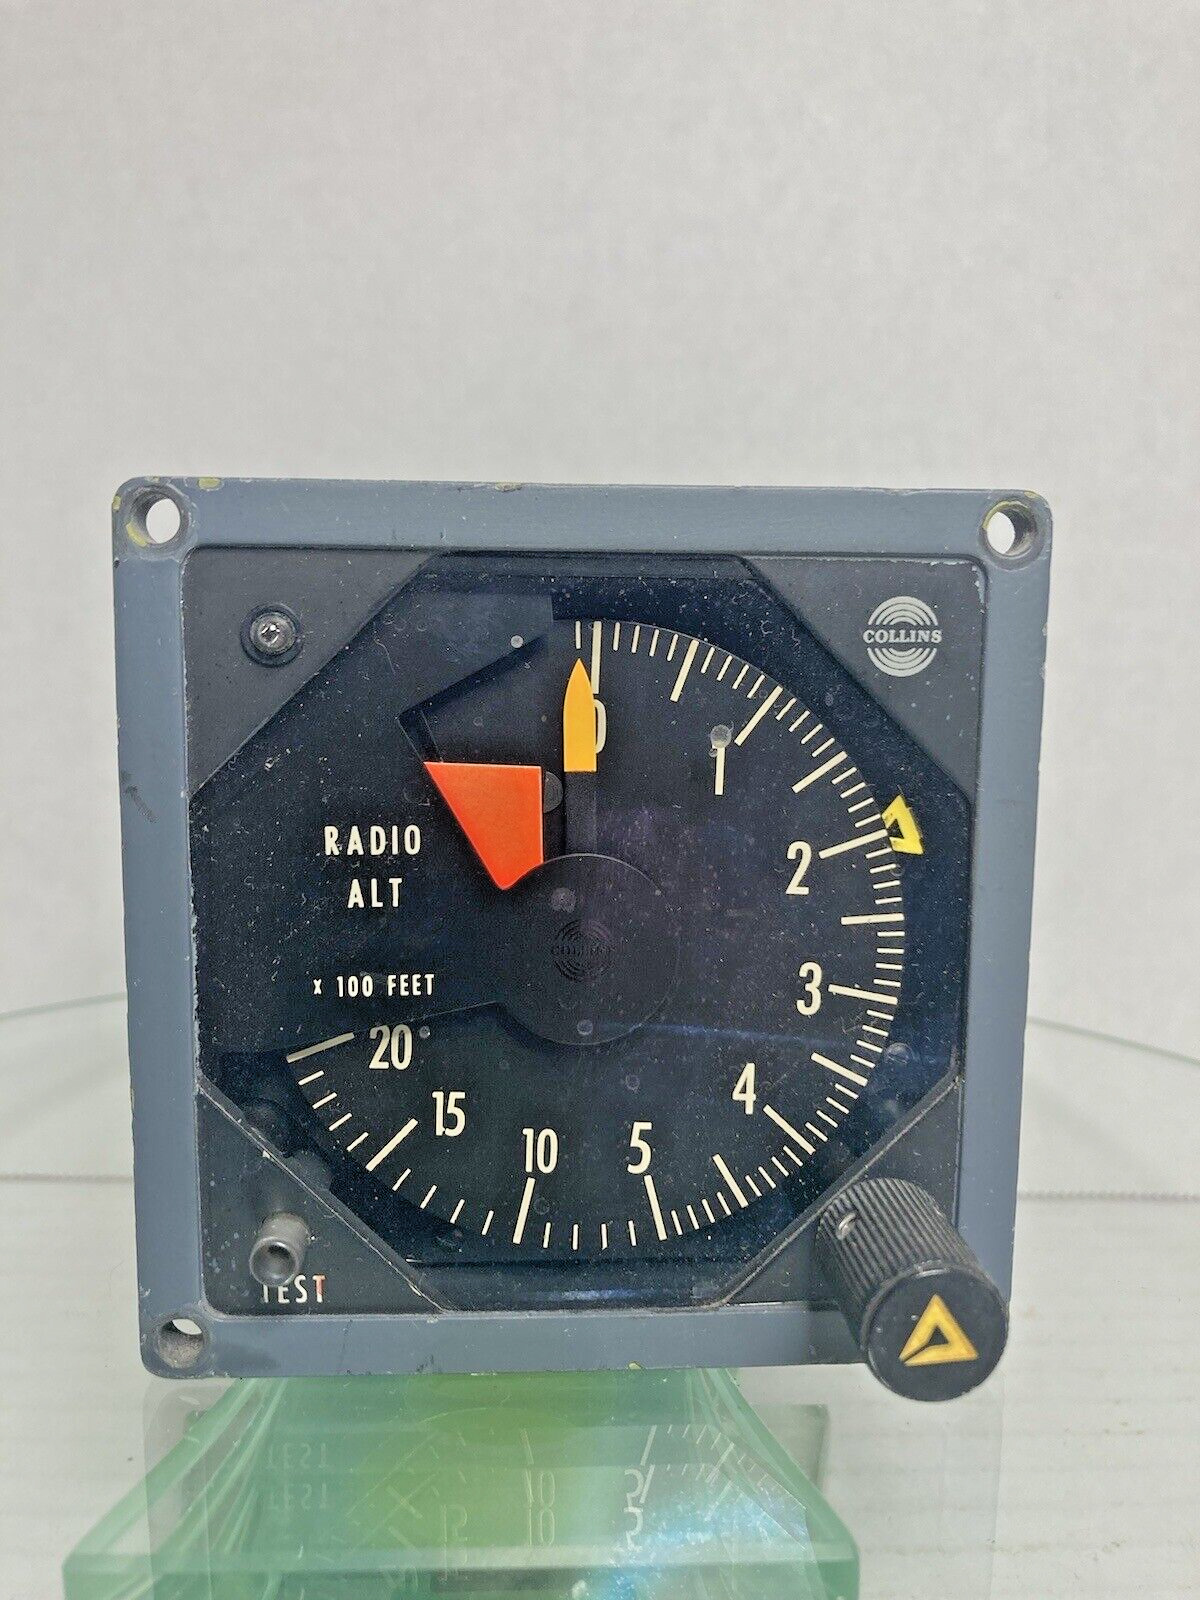 Collin’s Indicator Radio Altimeter Aviation Instrument Part Number 622-0171-002